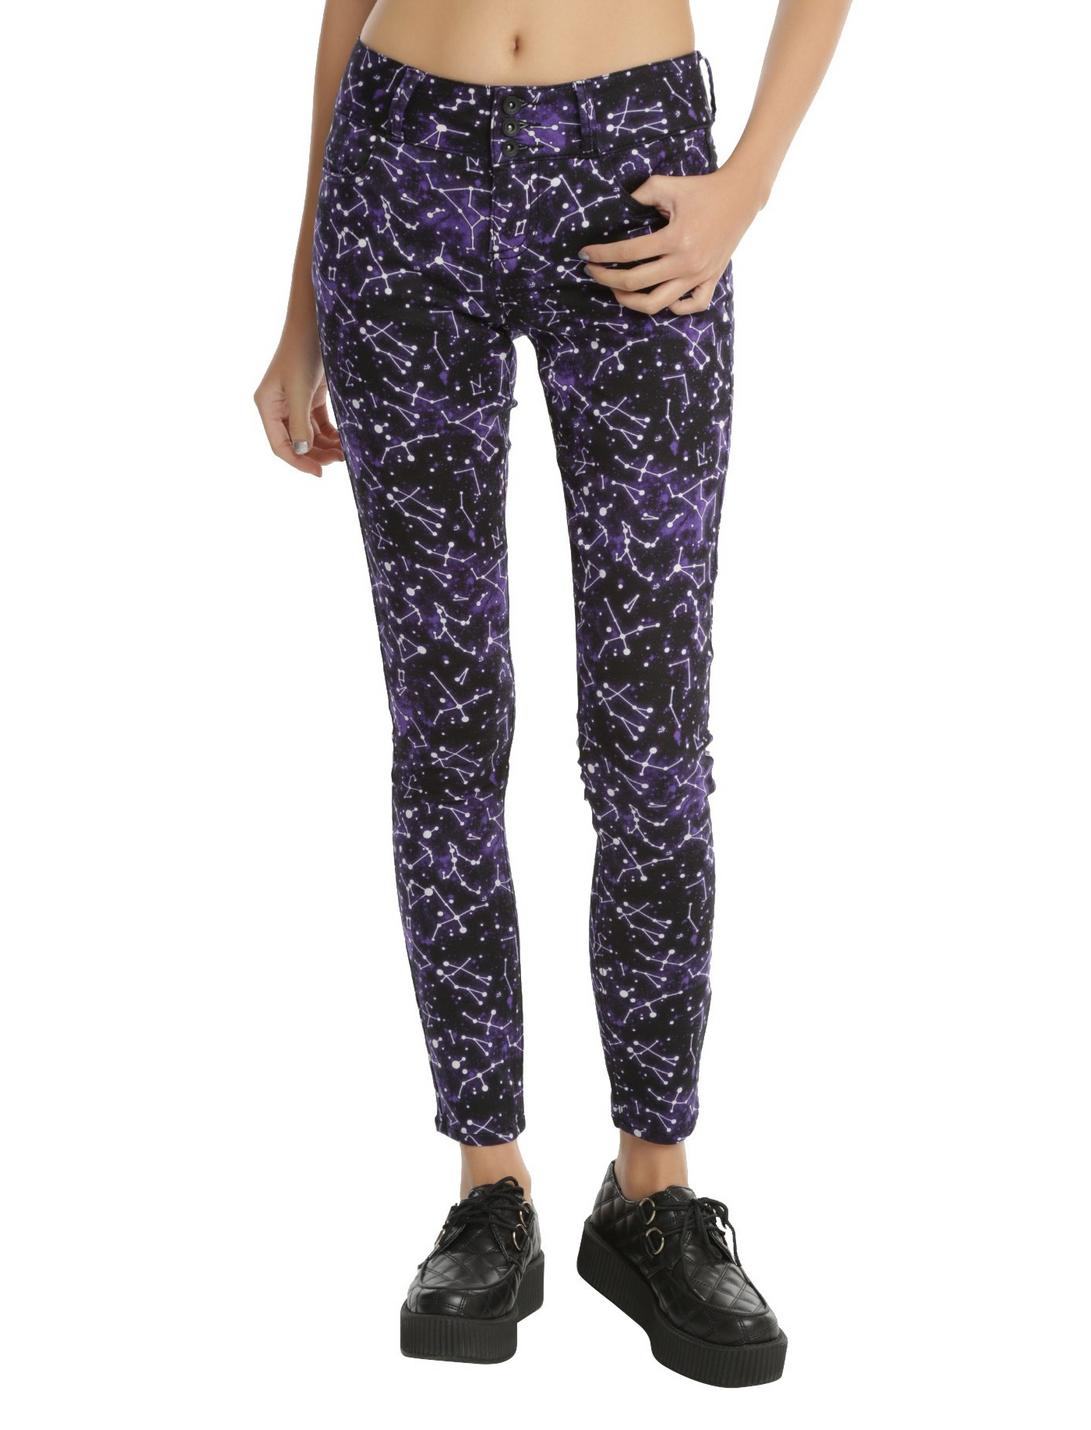 Blackheart Constellation Print Purple Super Skinny Jeans, BLUE, hi-res